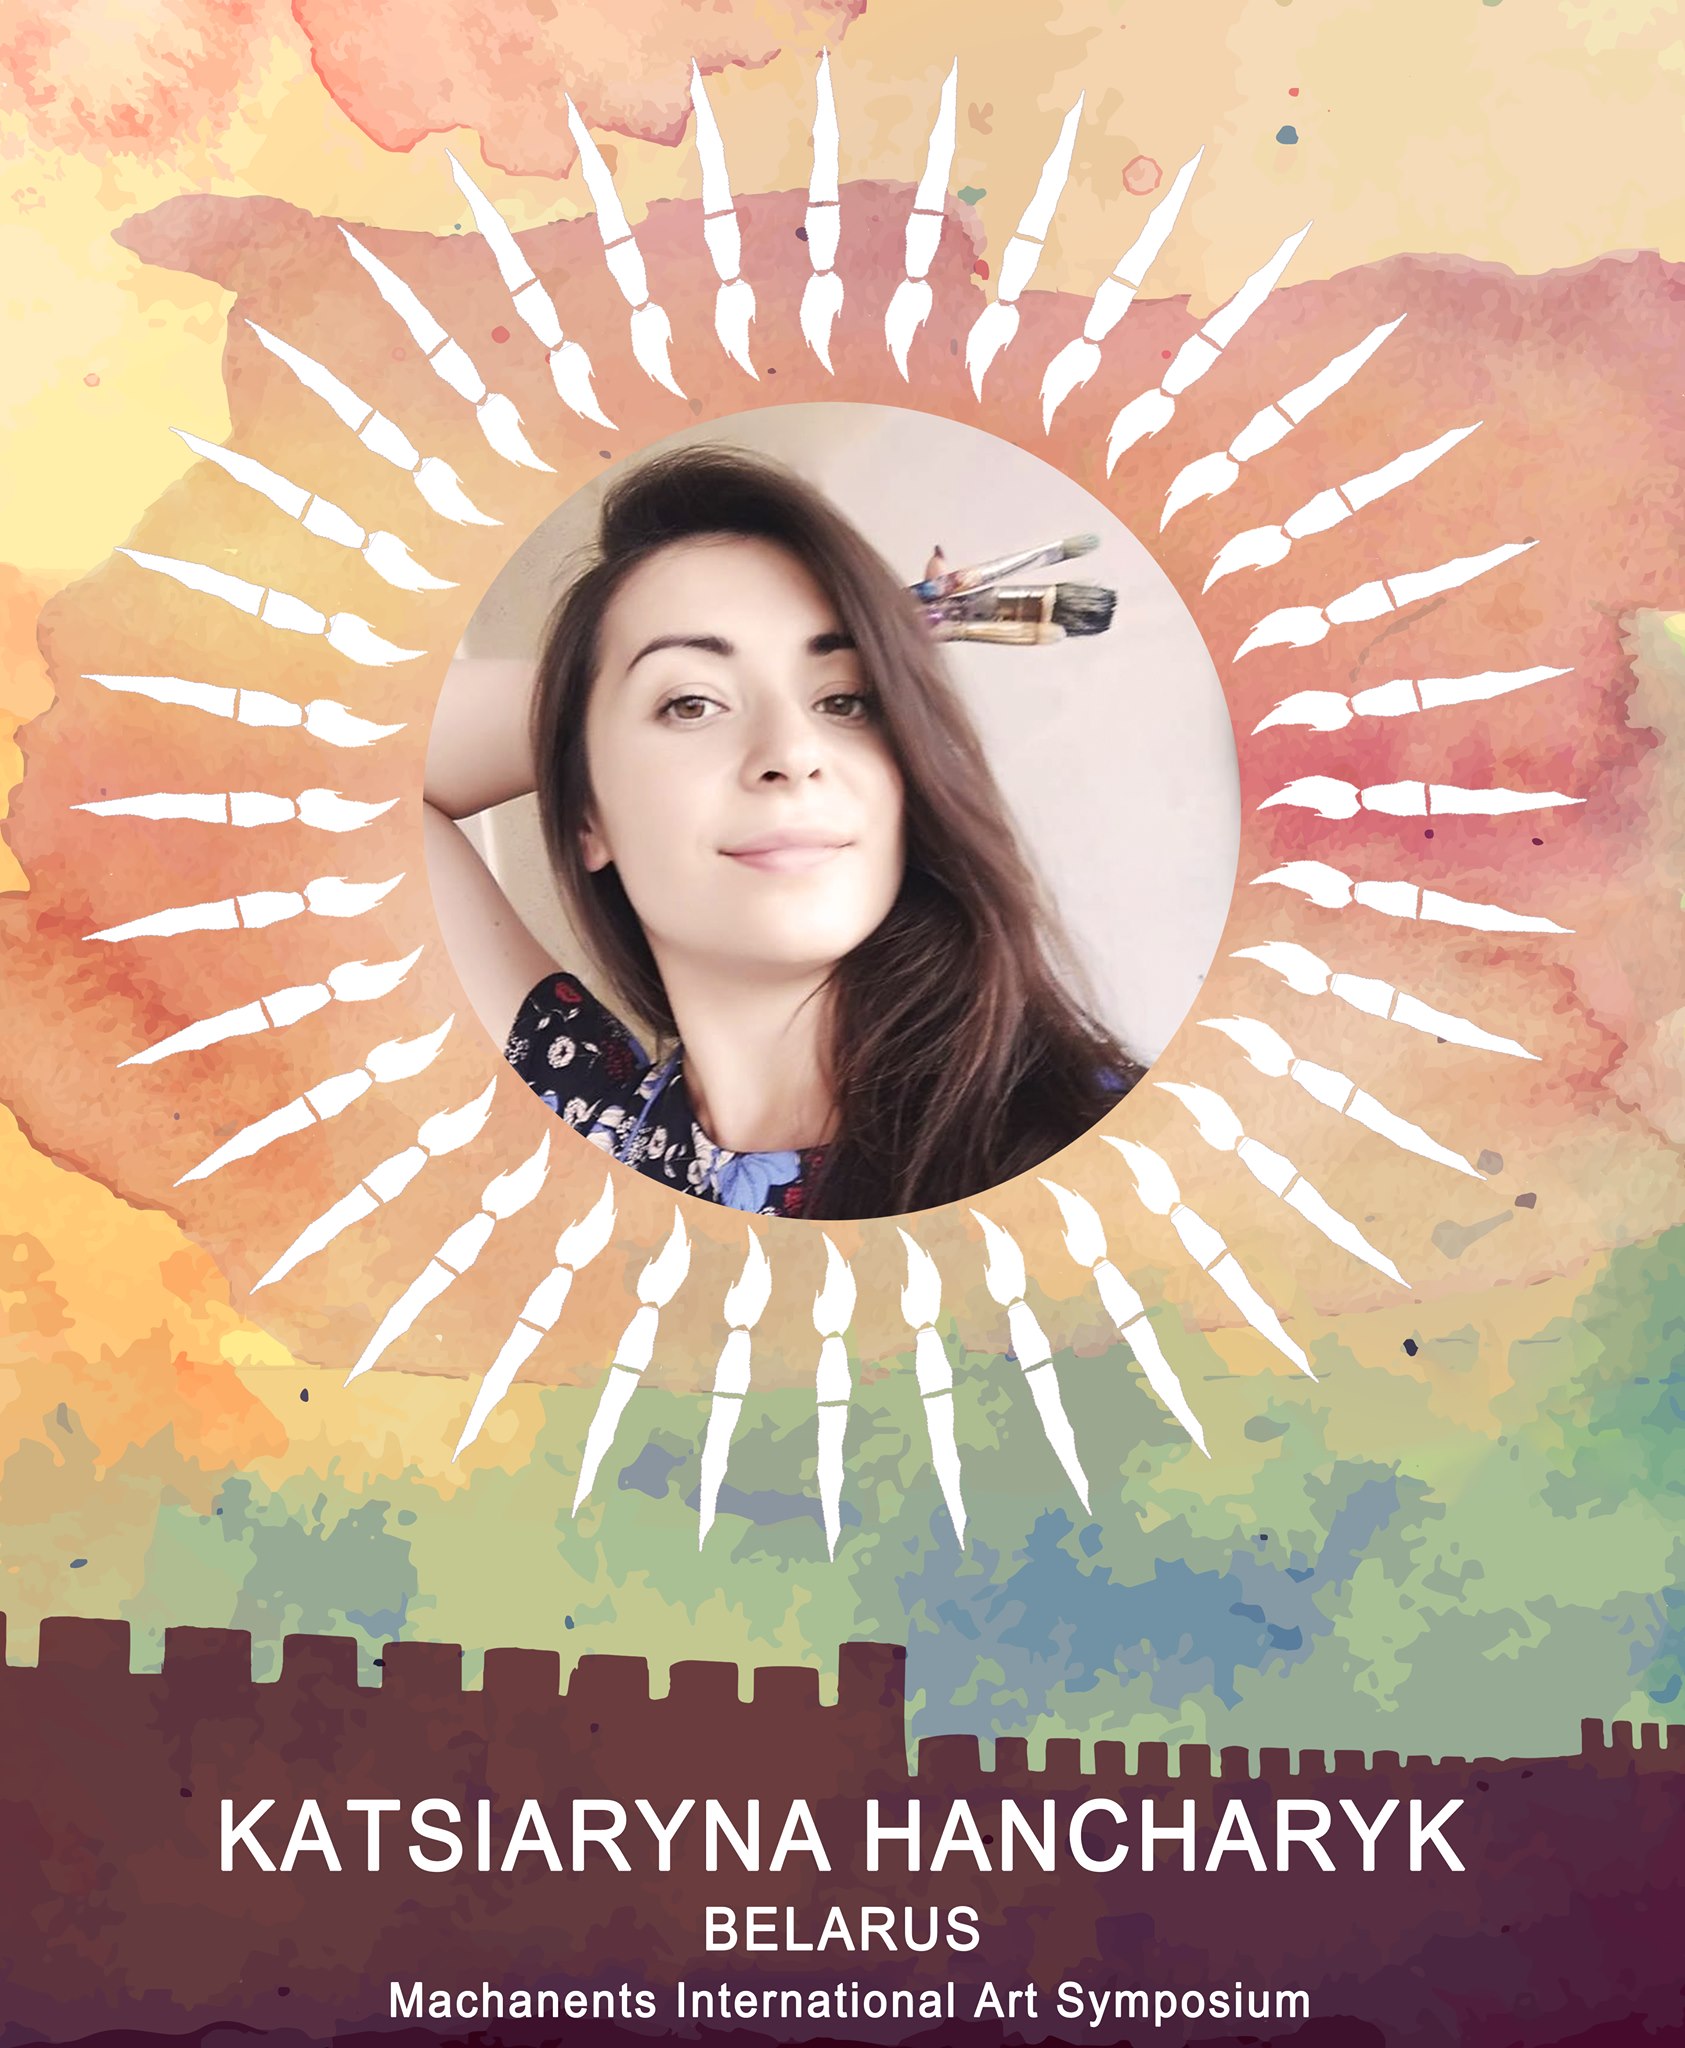 Katsiaryna Hancharyk